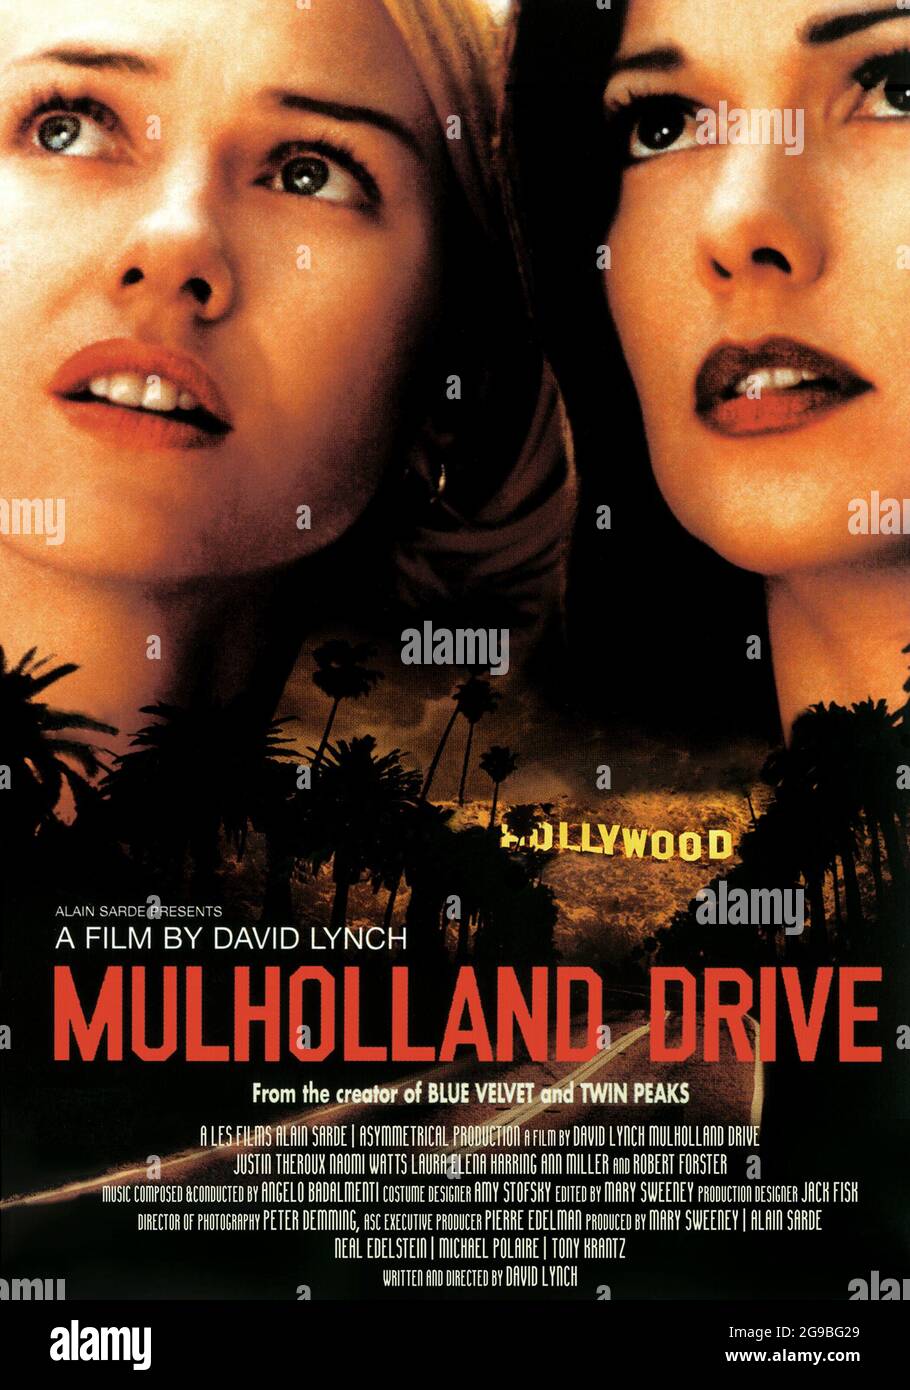 MULHOLLAND DRIVE (2001) -titolo originale: MULHOLLAND DR.-, diretto da DAVID LYNCH. CREDIT: THE PICTURE FACTORY ASYMMETRICAL PRODUCTIONS/IMAGINE TELEVIS / ALBUM Foto Stock